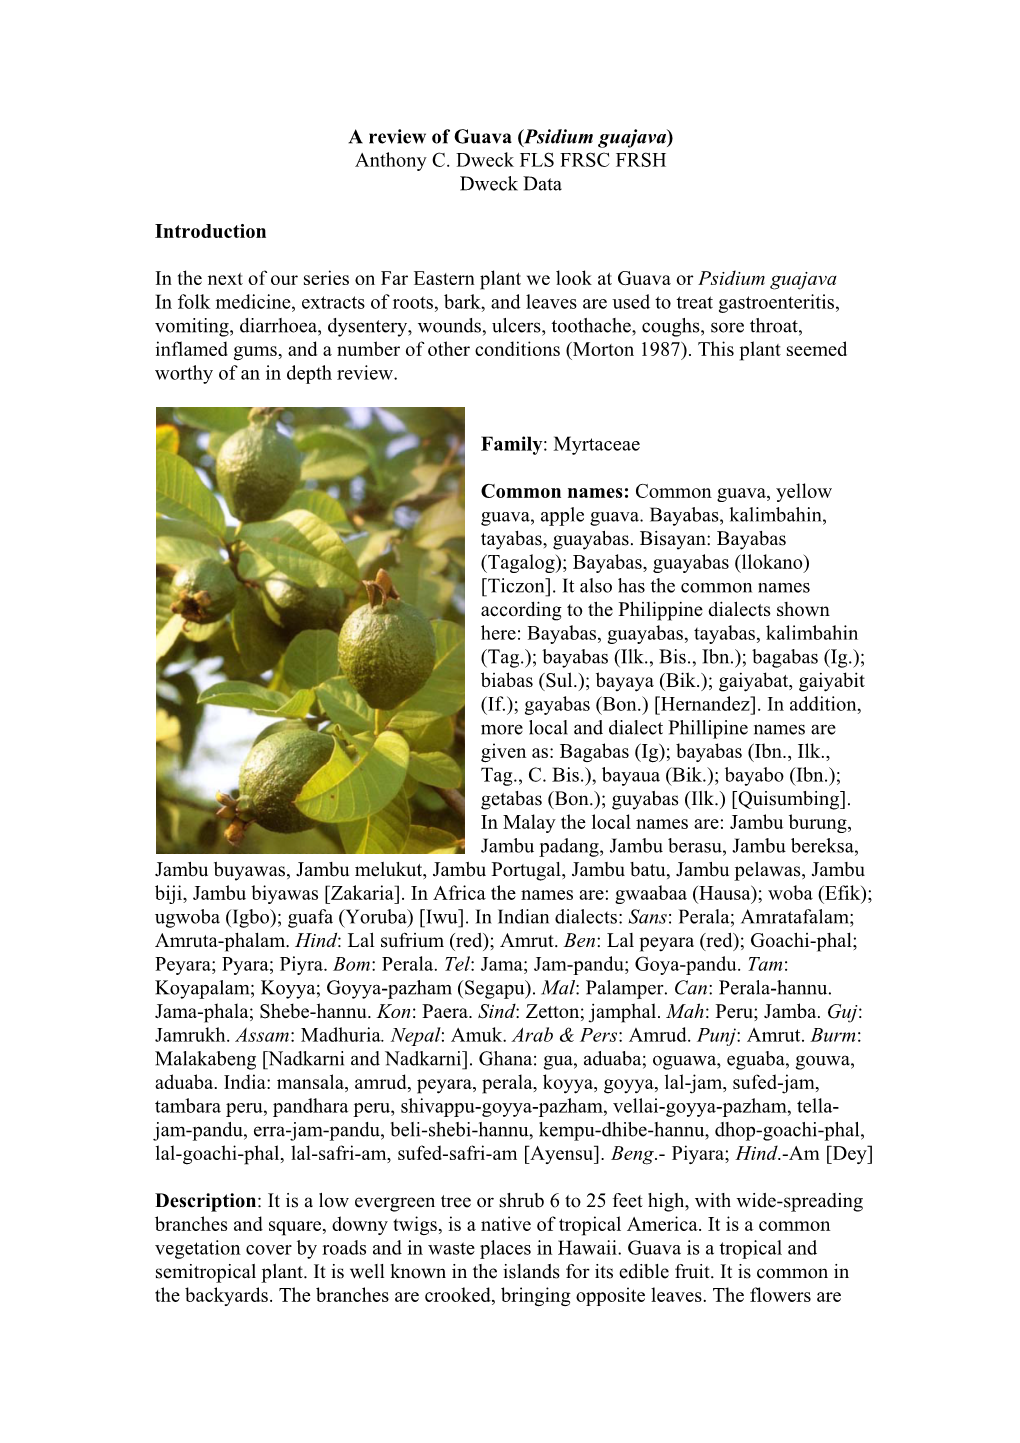 A Review of Guava (Psidium Guajava) Anthony C